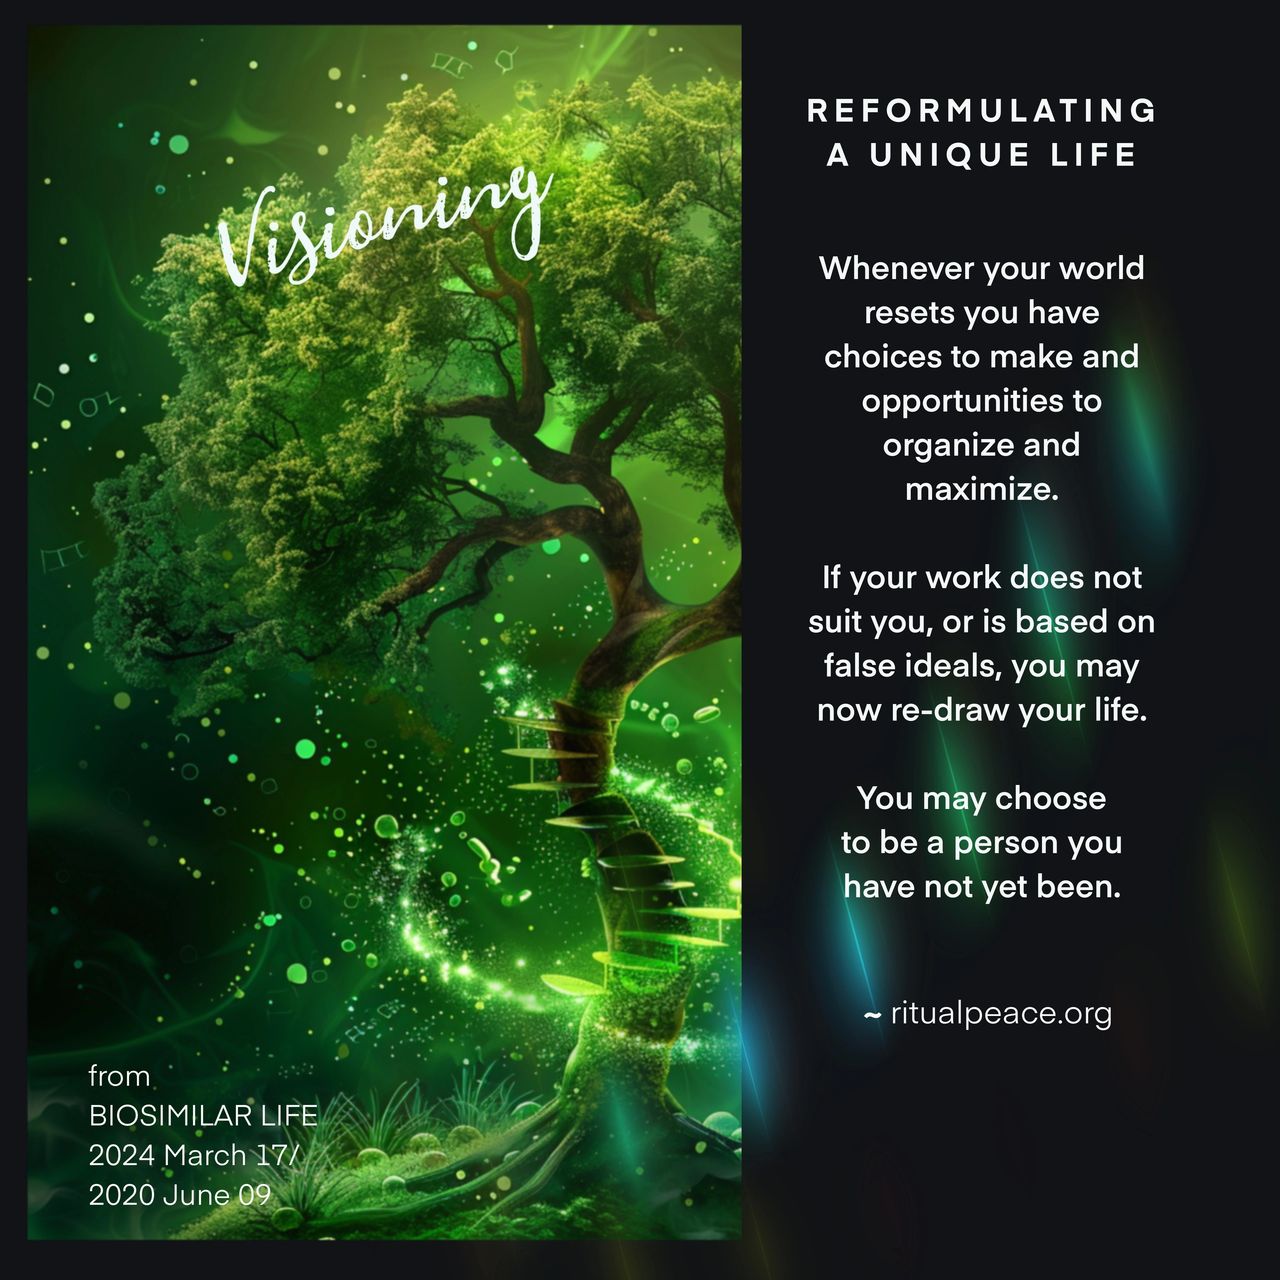 REFORMULATING A UNIQUE LIFE, BIOSIMILAR, VISIONING, TREE, DNA SPINE